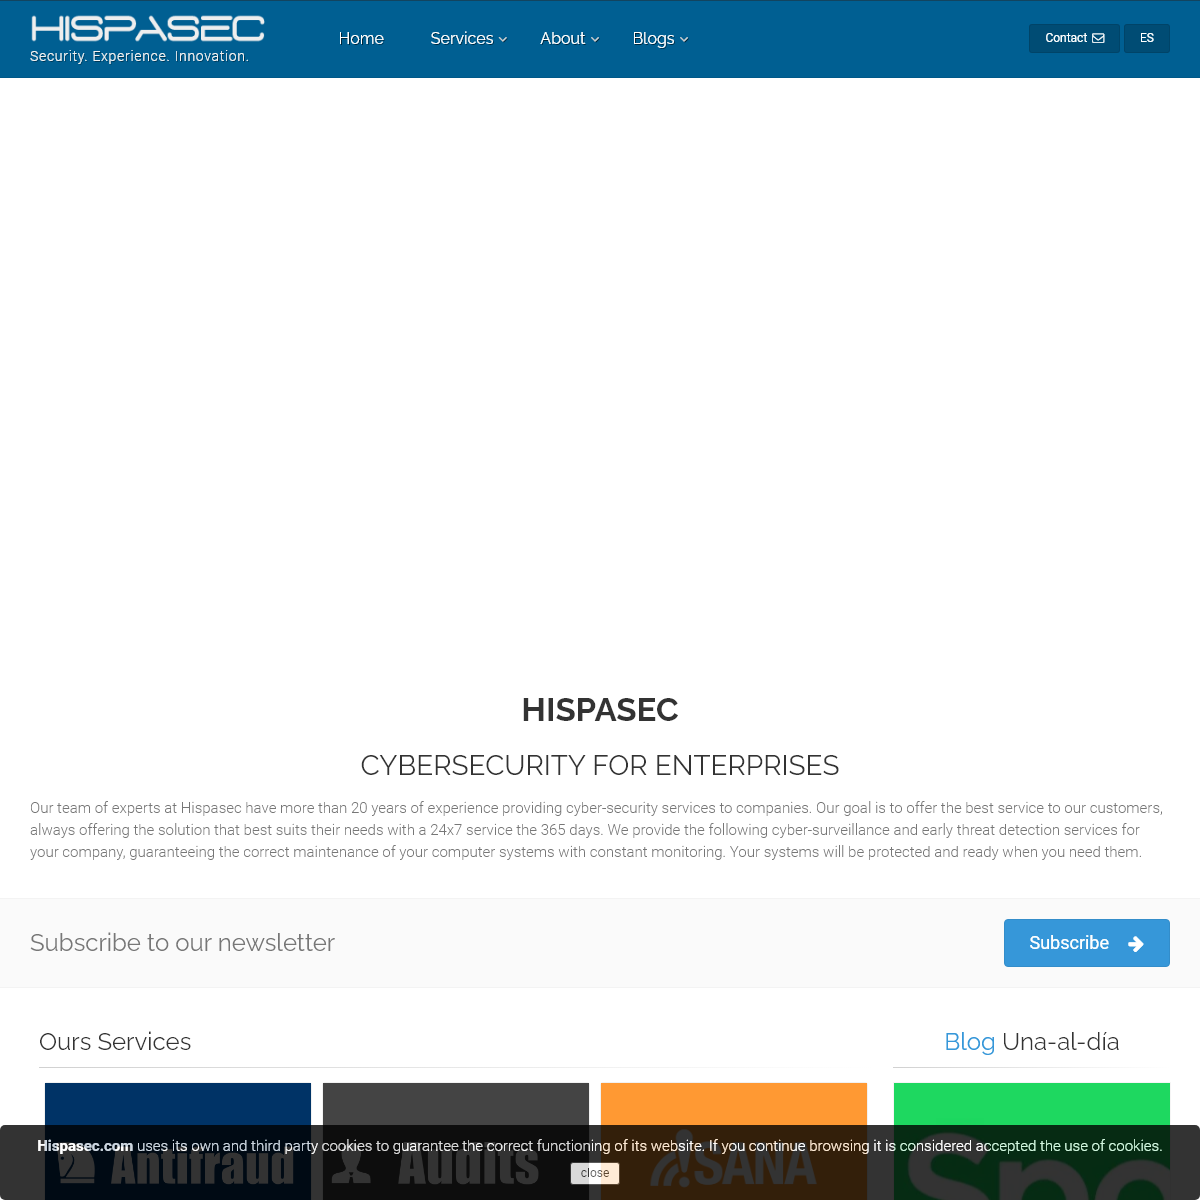 A complete backup of hispasec.com